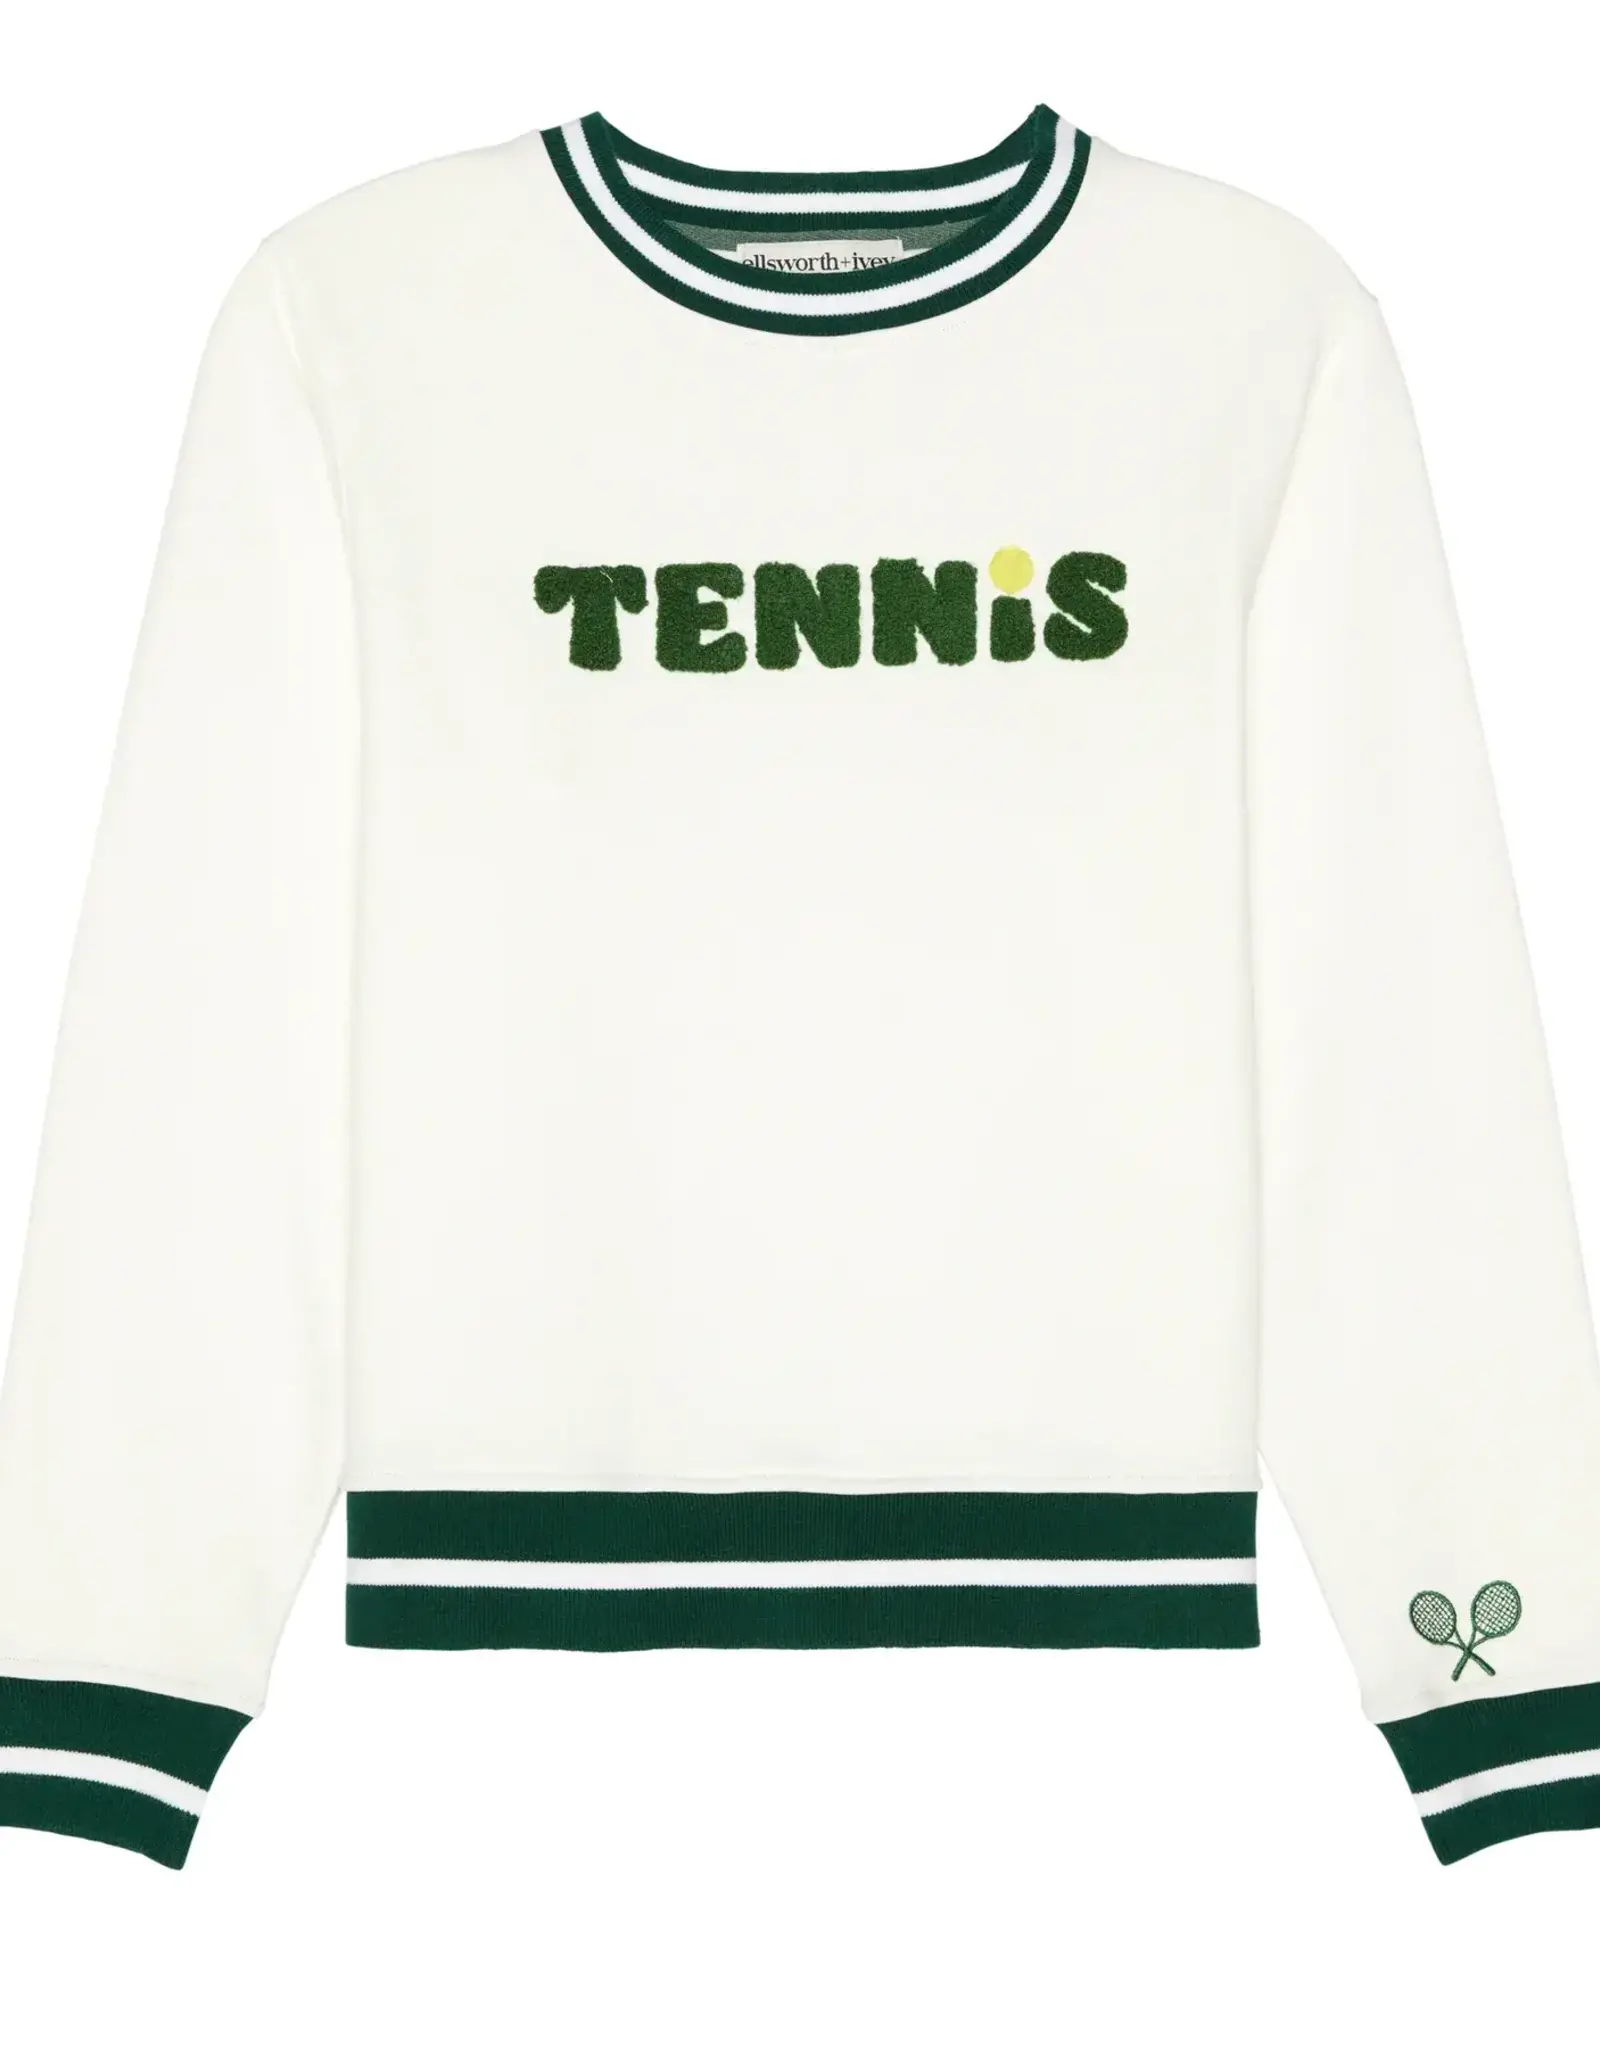 Ellsworth + Ivey Ellsworth + Ivey Tennis  Sweatshirt